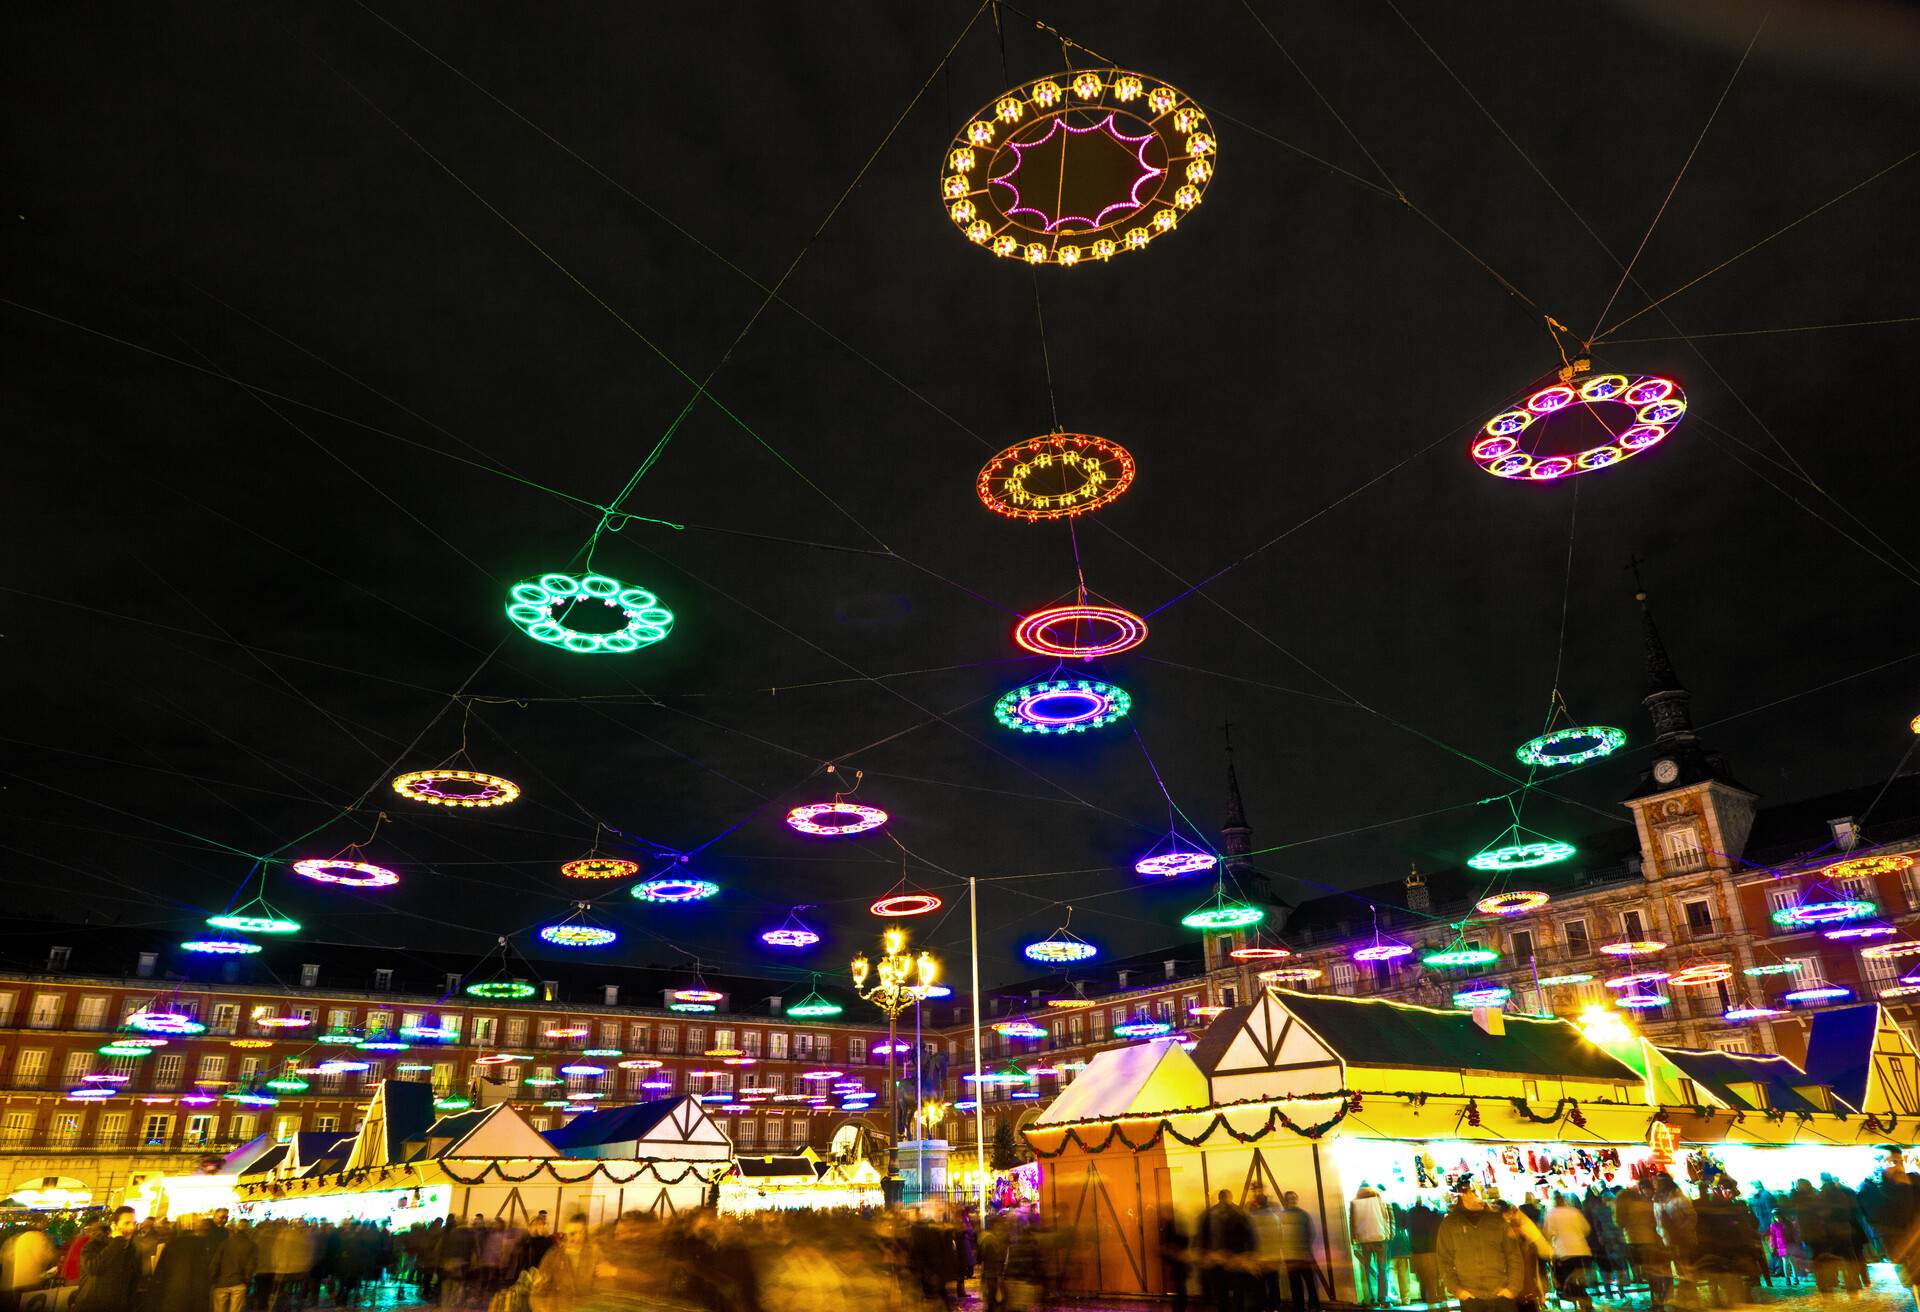 illumination in Madrids Christmas market at the Plaza major